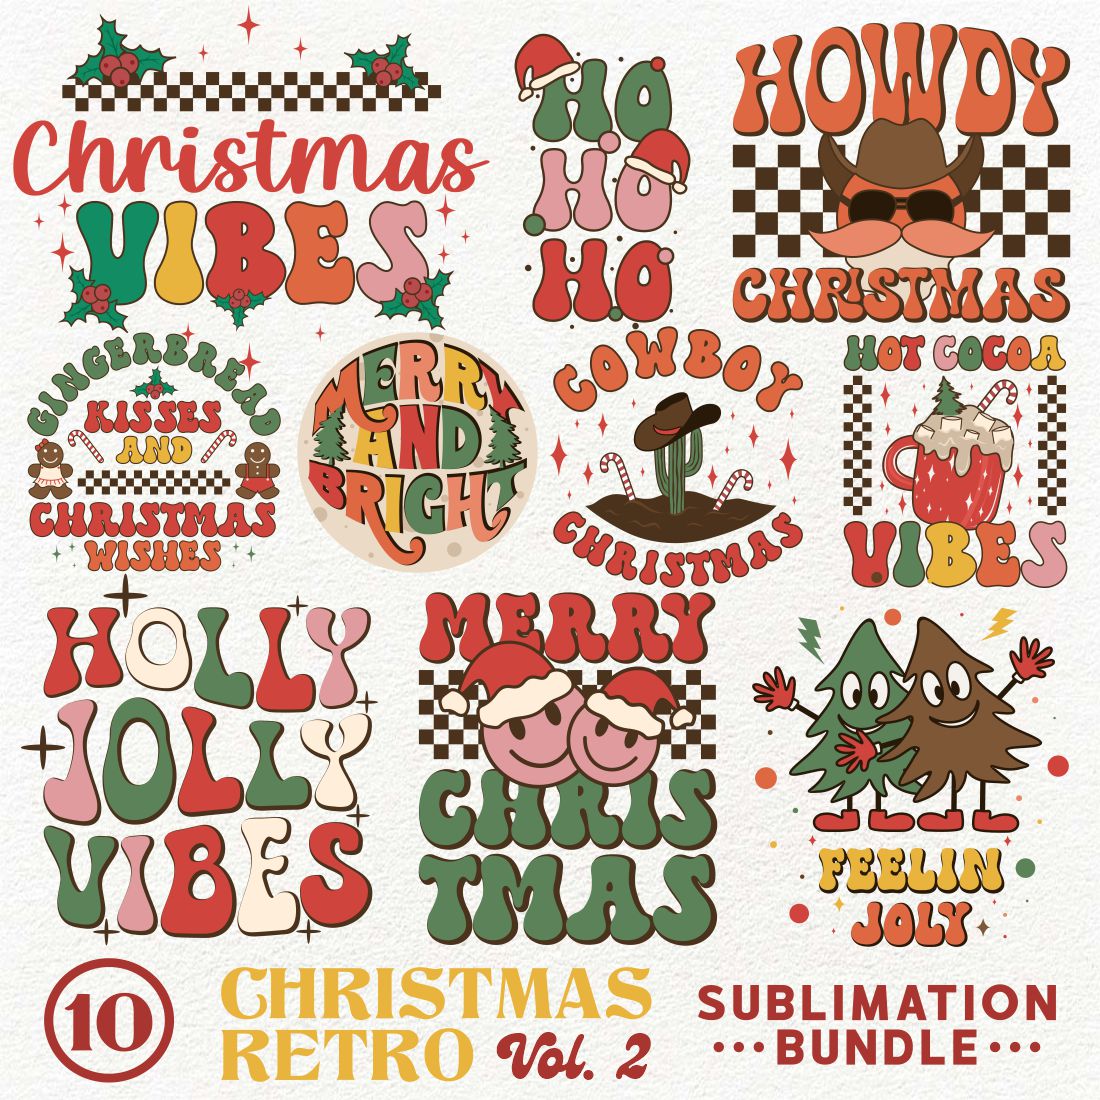 T-shirt Retro Christmas Sublimation Design cover image.